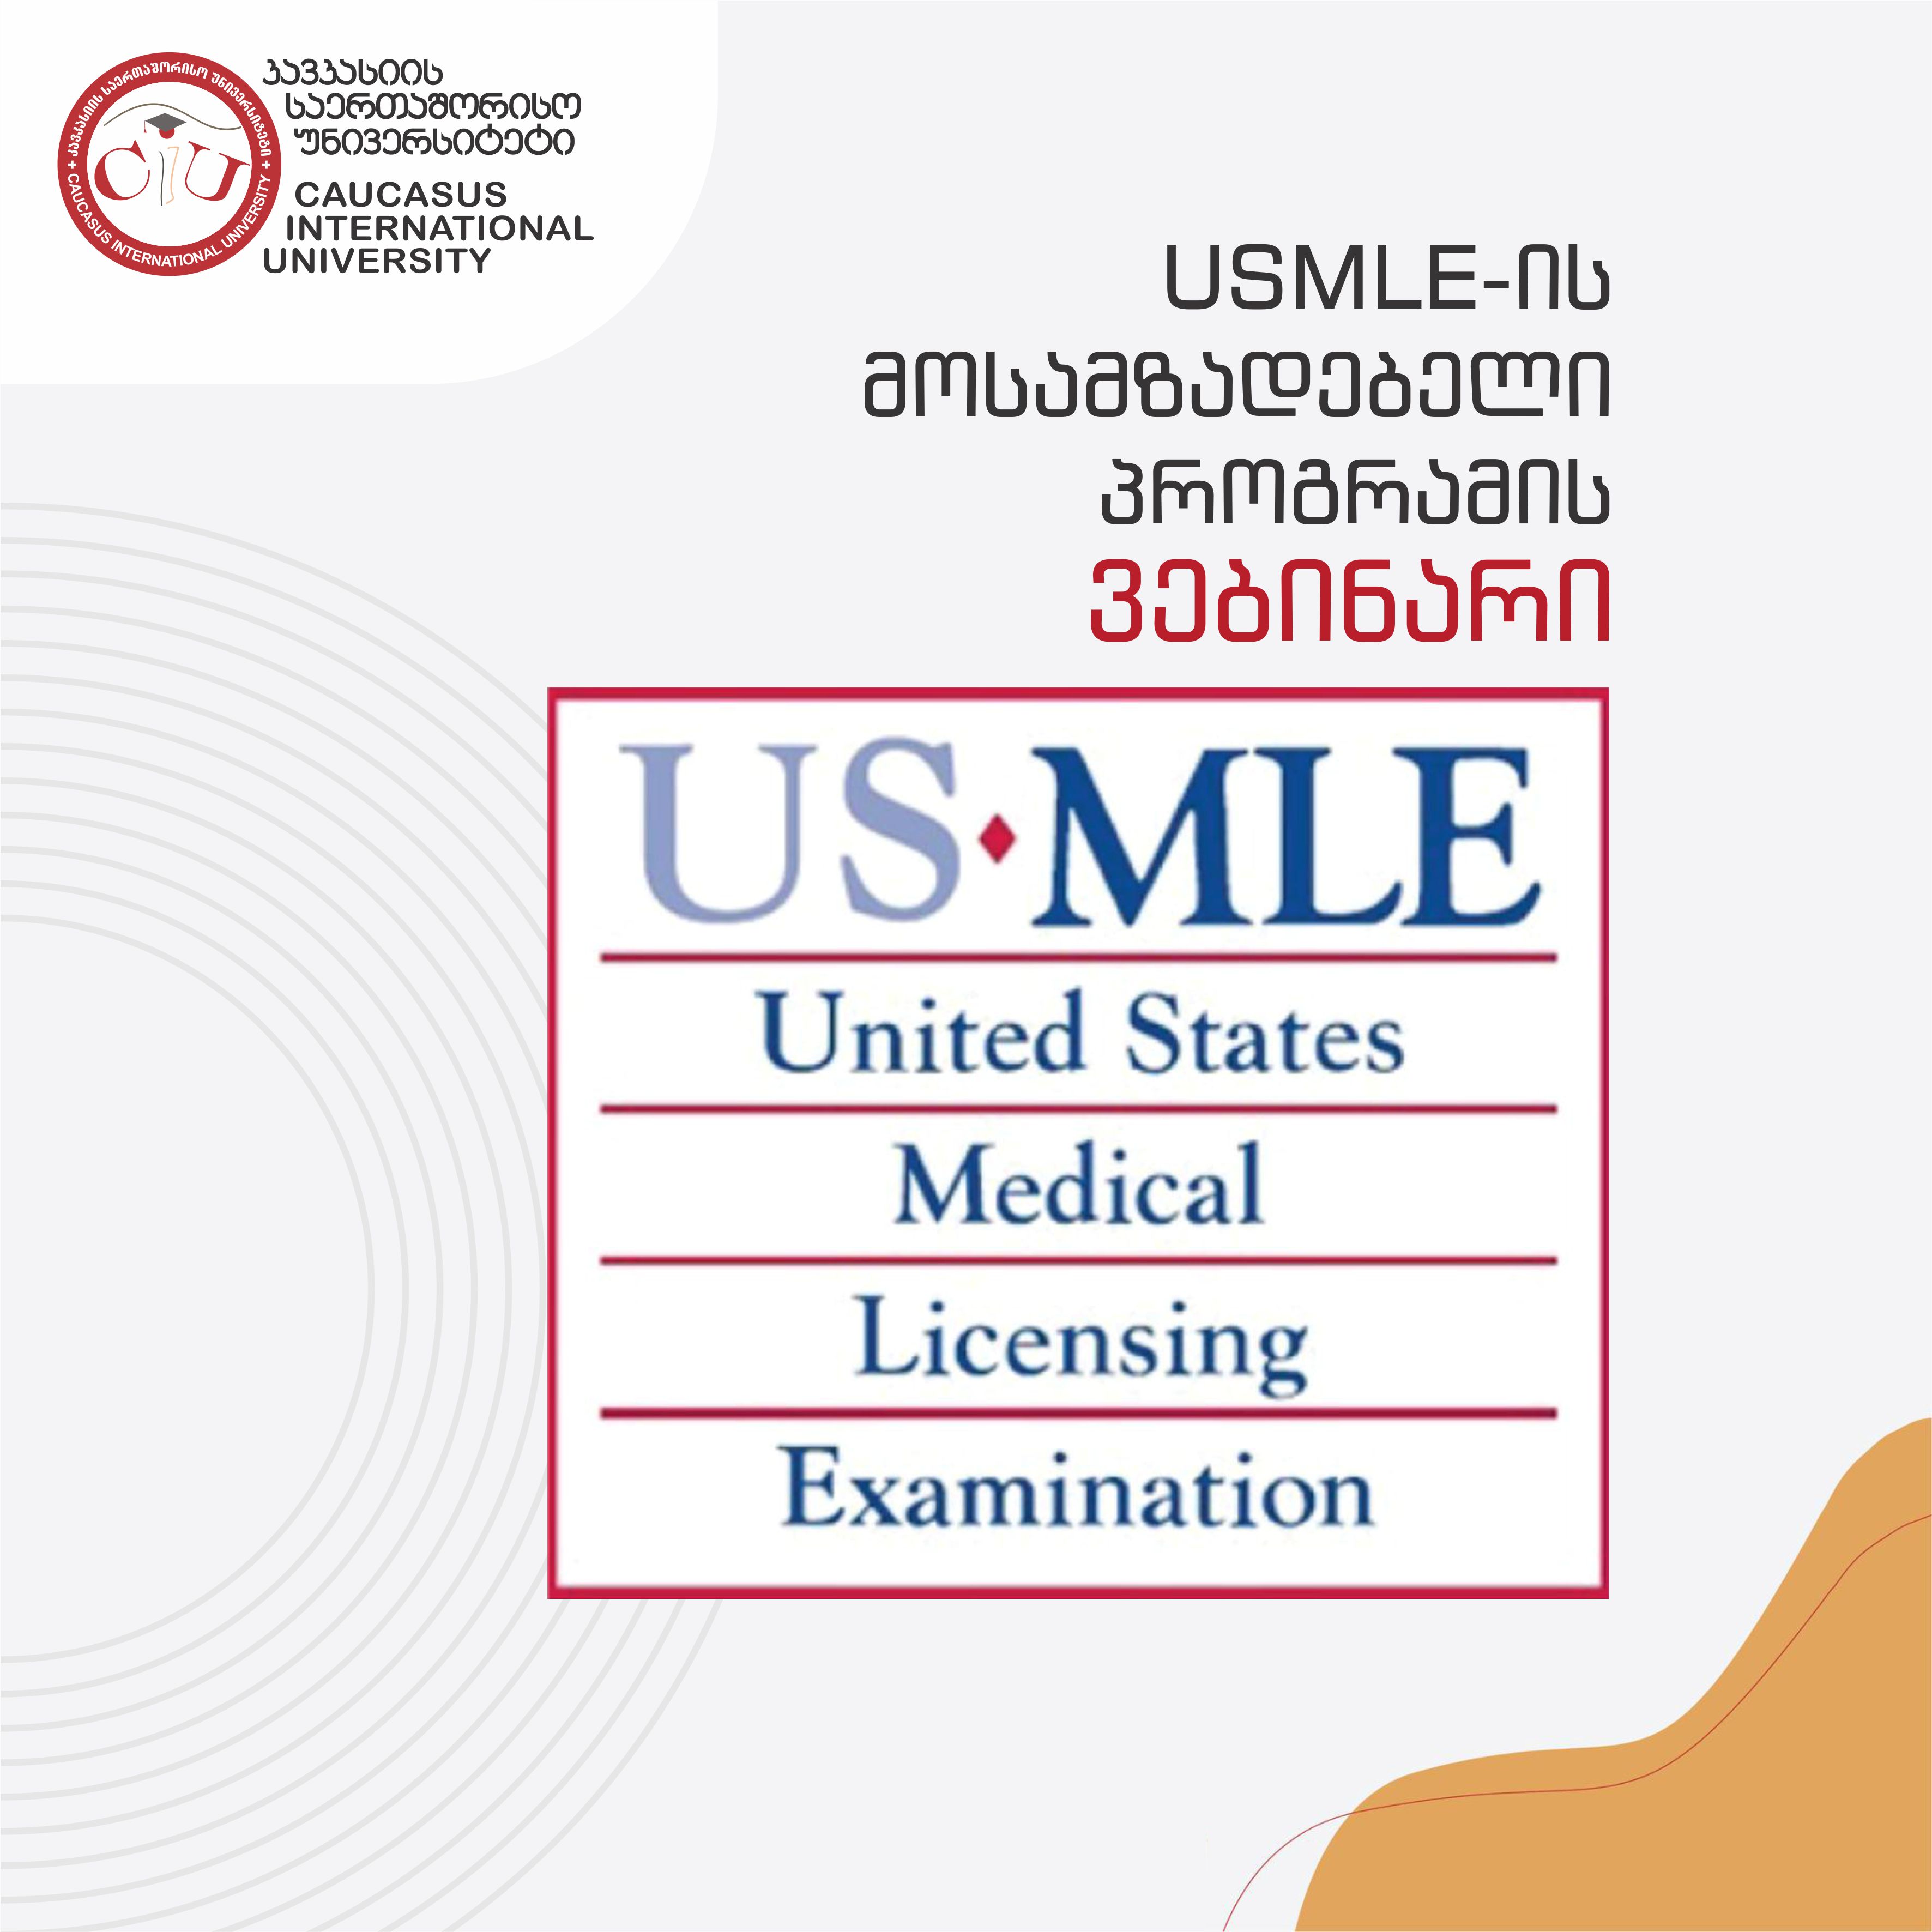  USMLE Preparation Program Webinar for CIU Medical Students